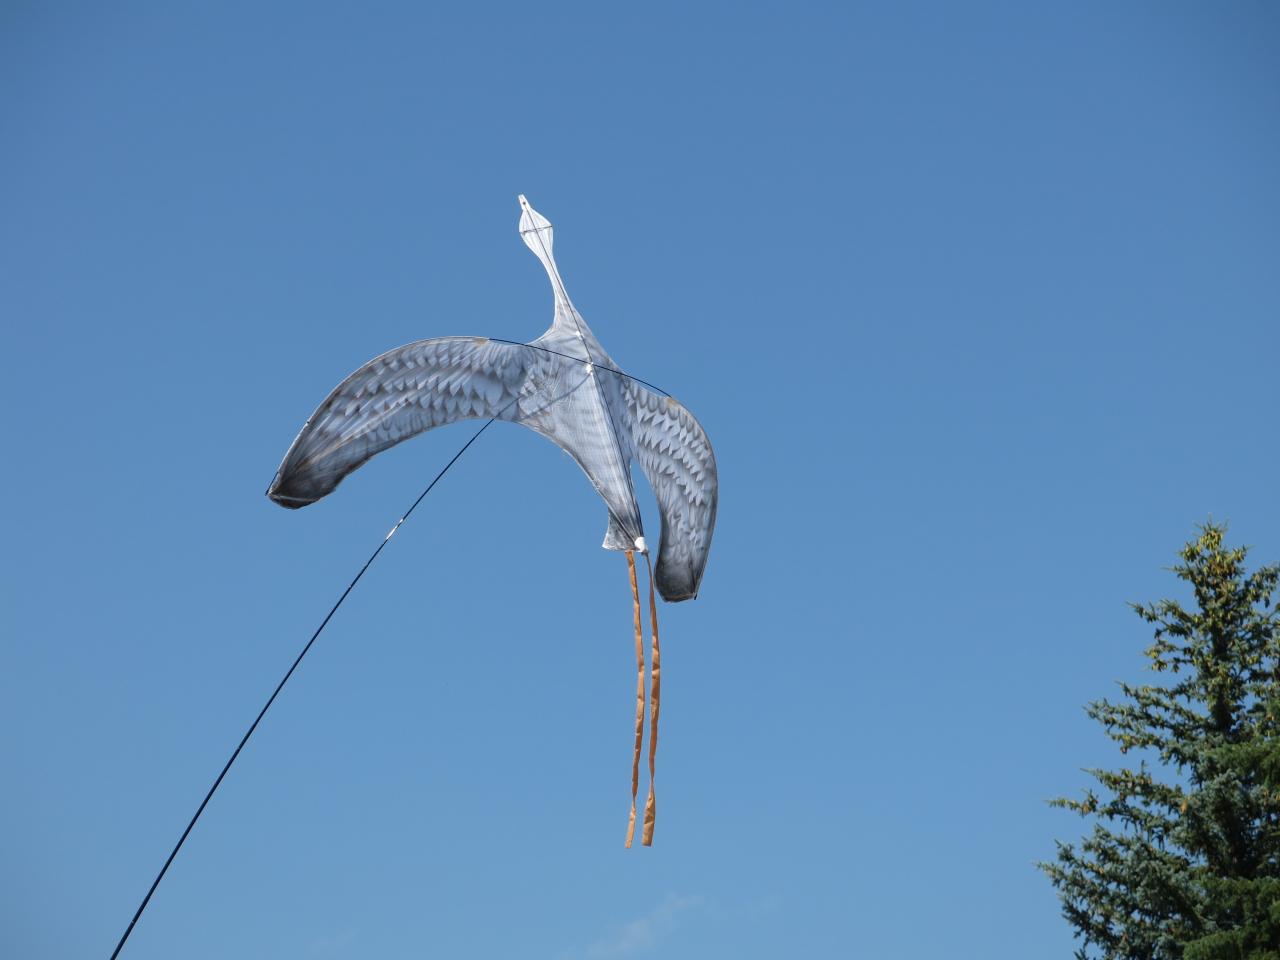 Crane kite